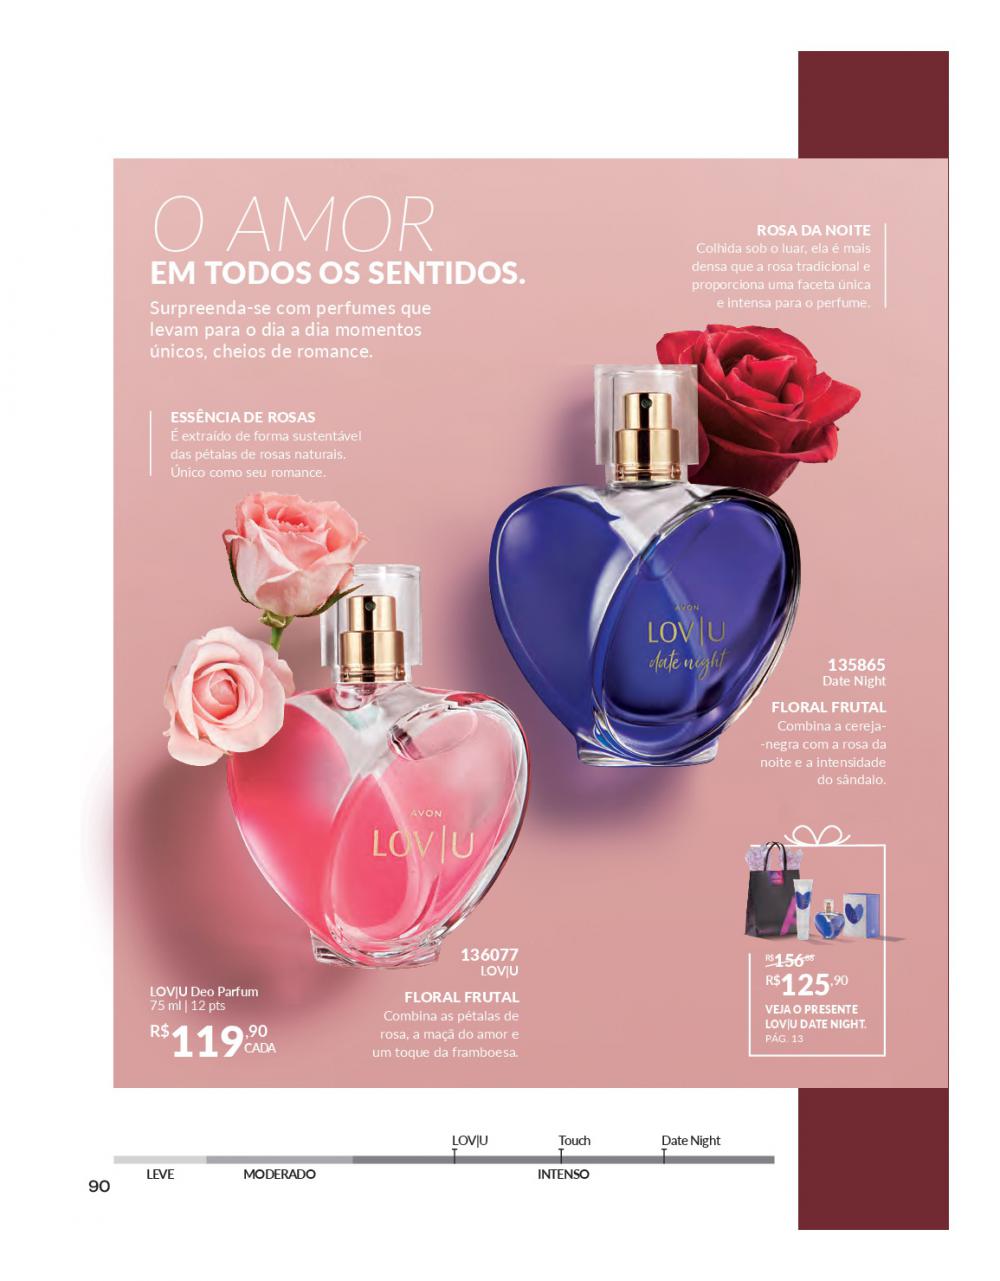 Catalogo Avon ciclo 19 #CapCut #avon #perfume #cuidadoscomapele